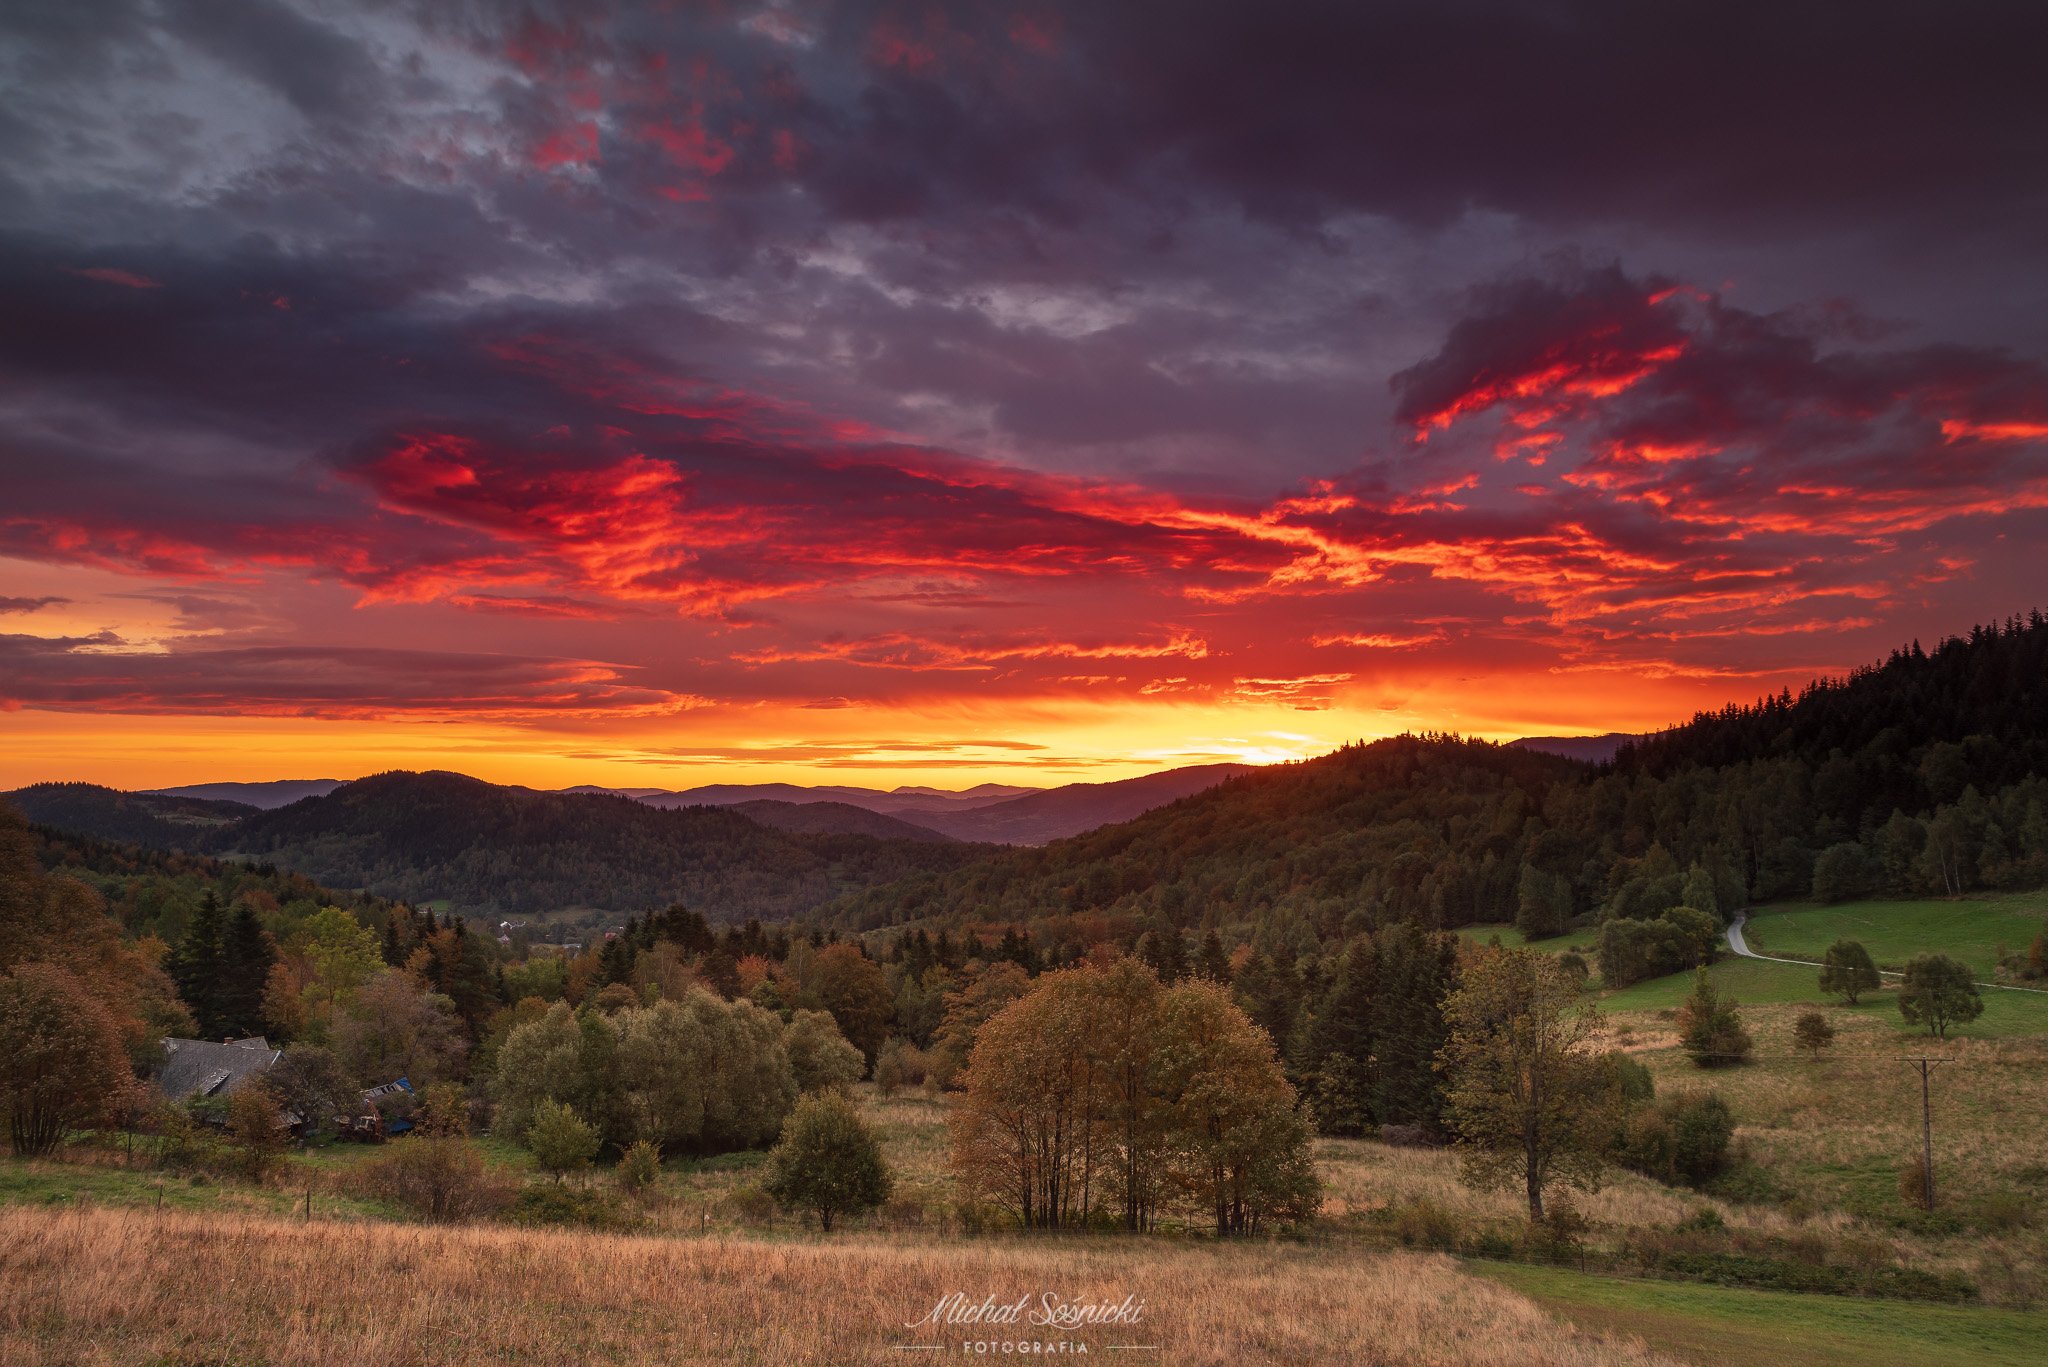 #sky #color #autumn #mountains #poland #benro #pentax #filters #nature #amazing #landscape, Michał Sośnicki